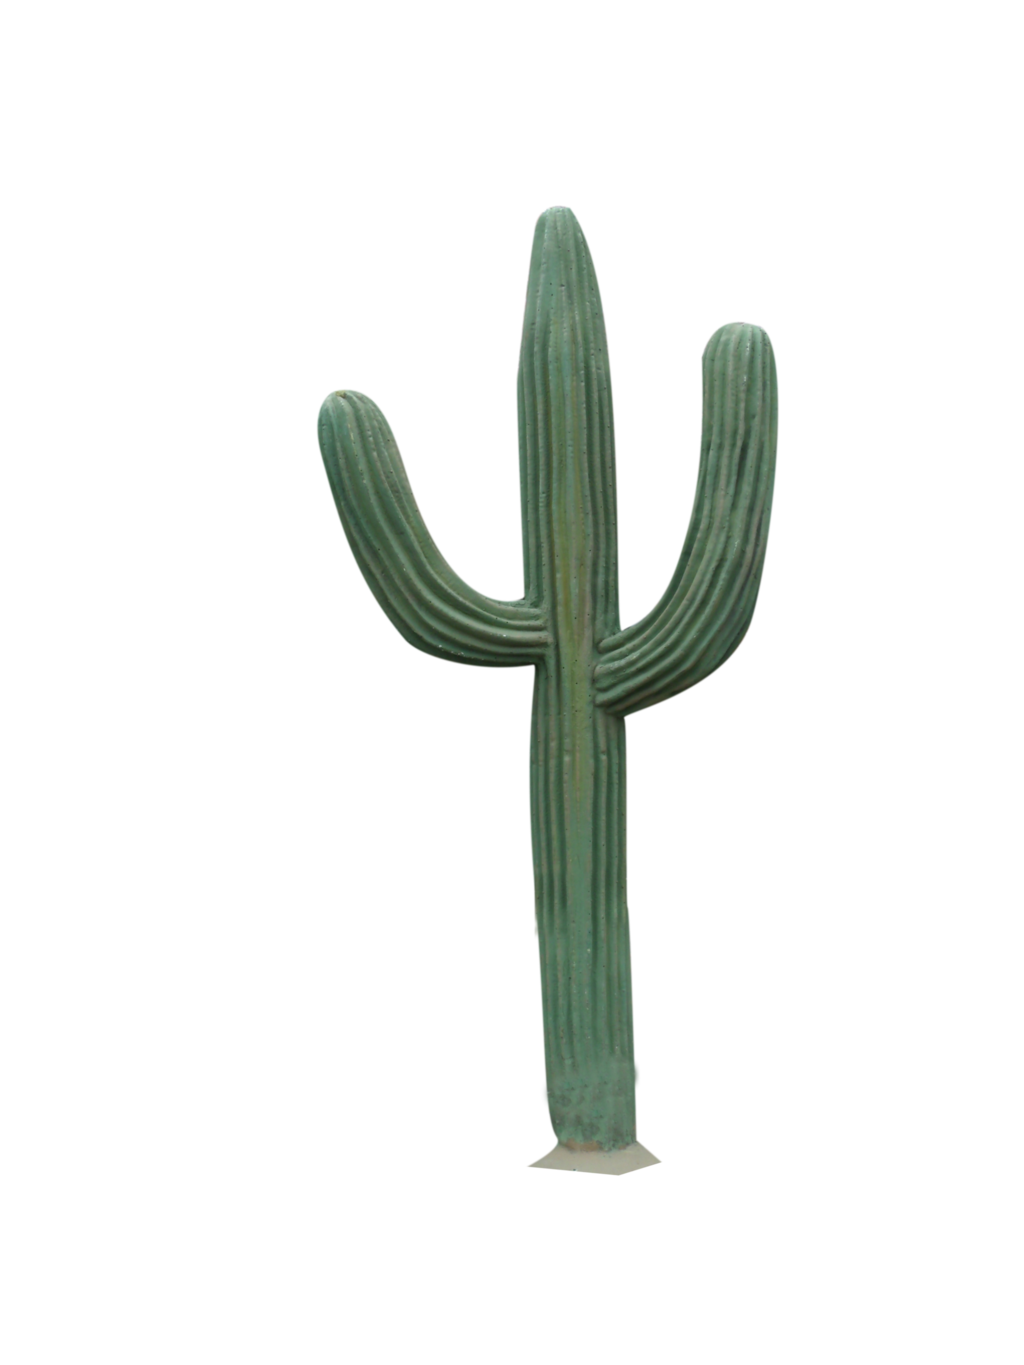 Cactus Image PNG Image